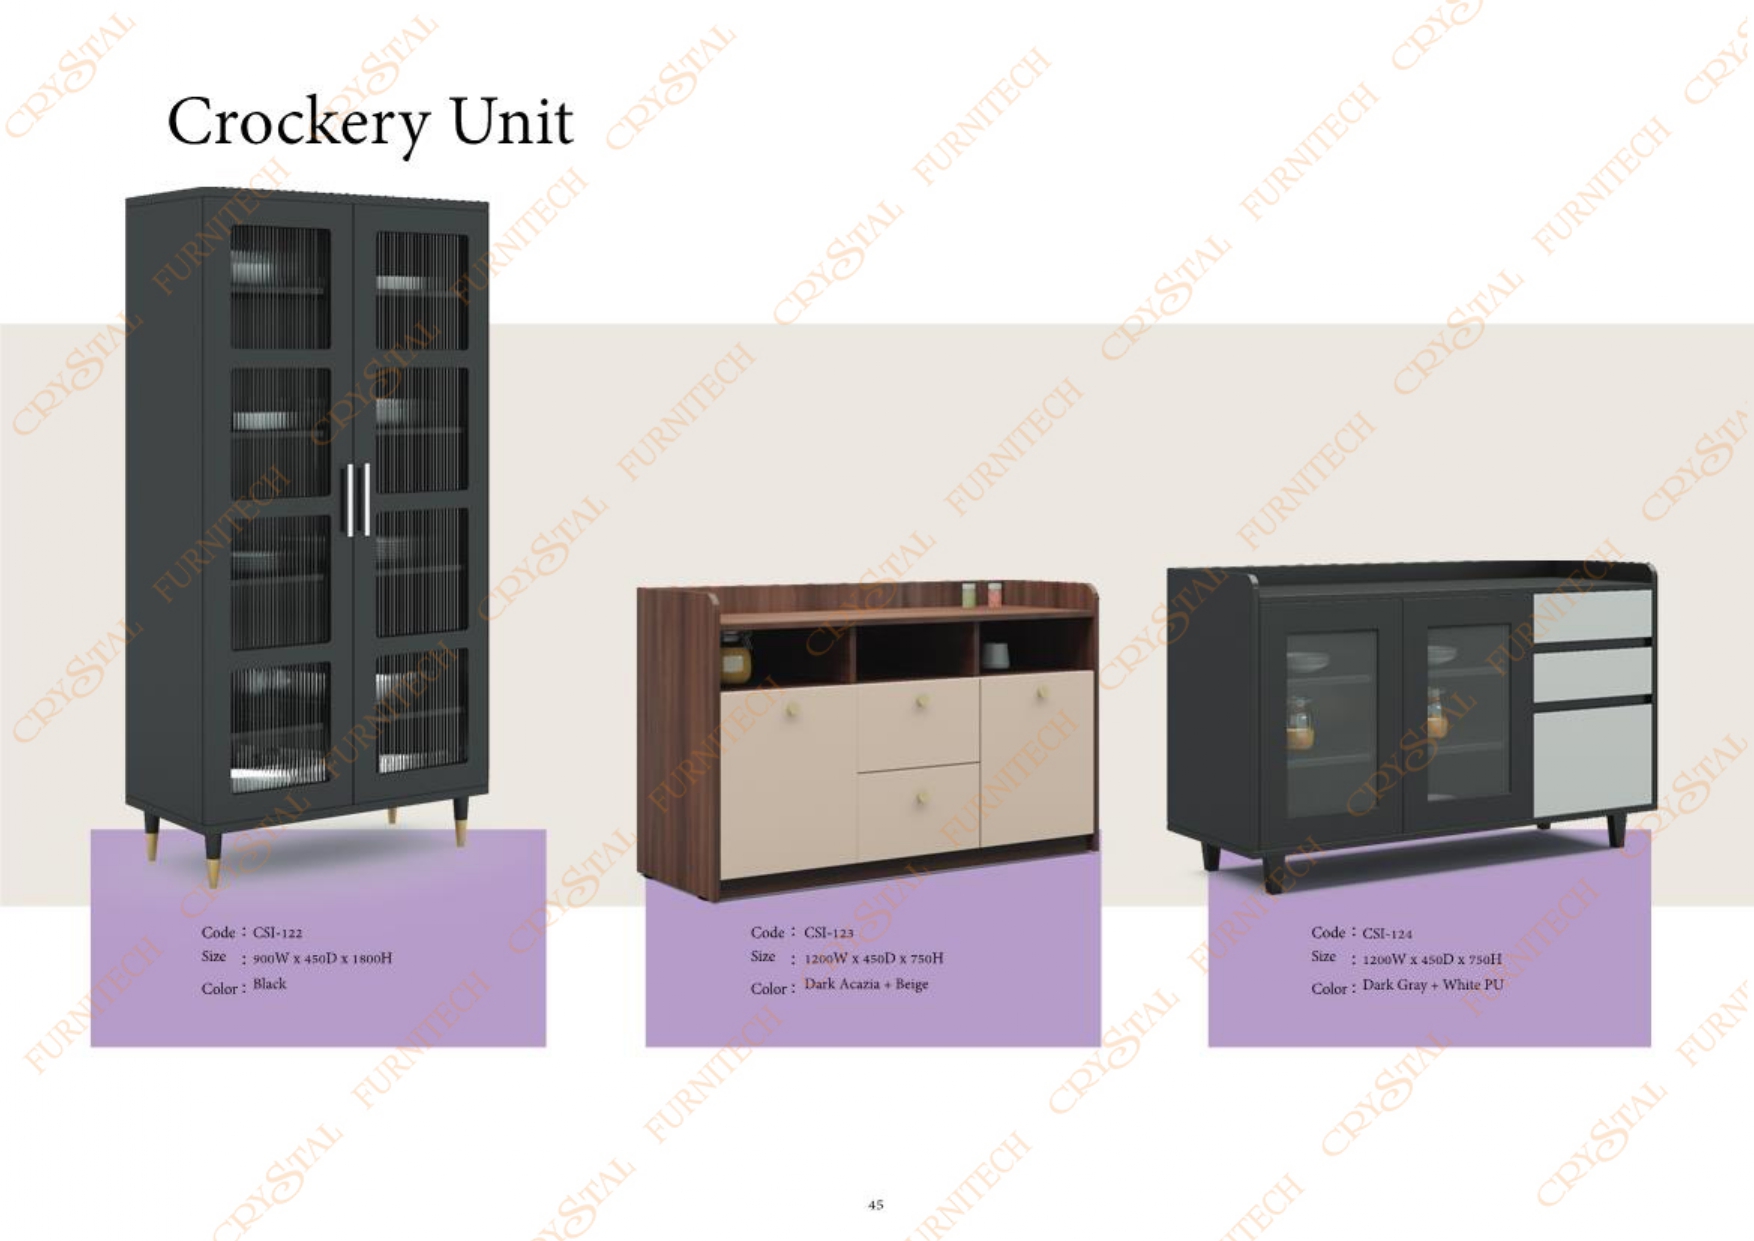 Crockery Unit Design